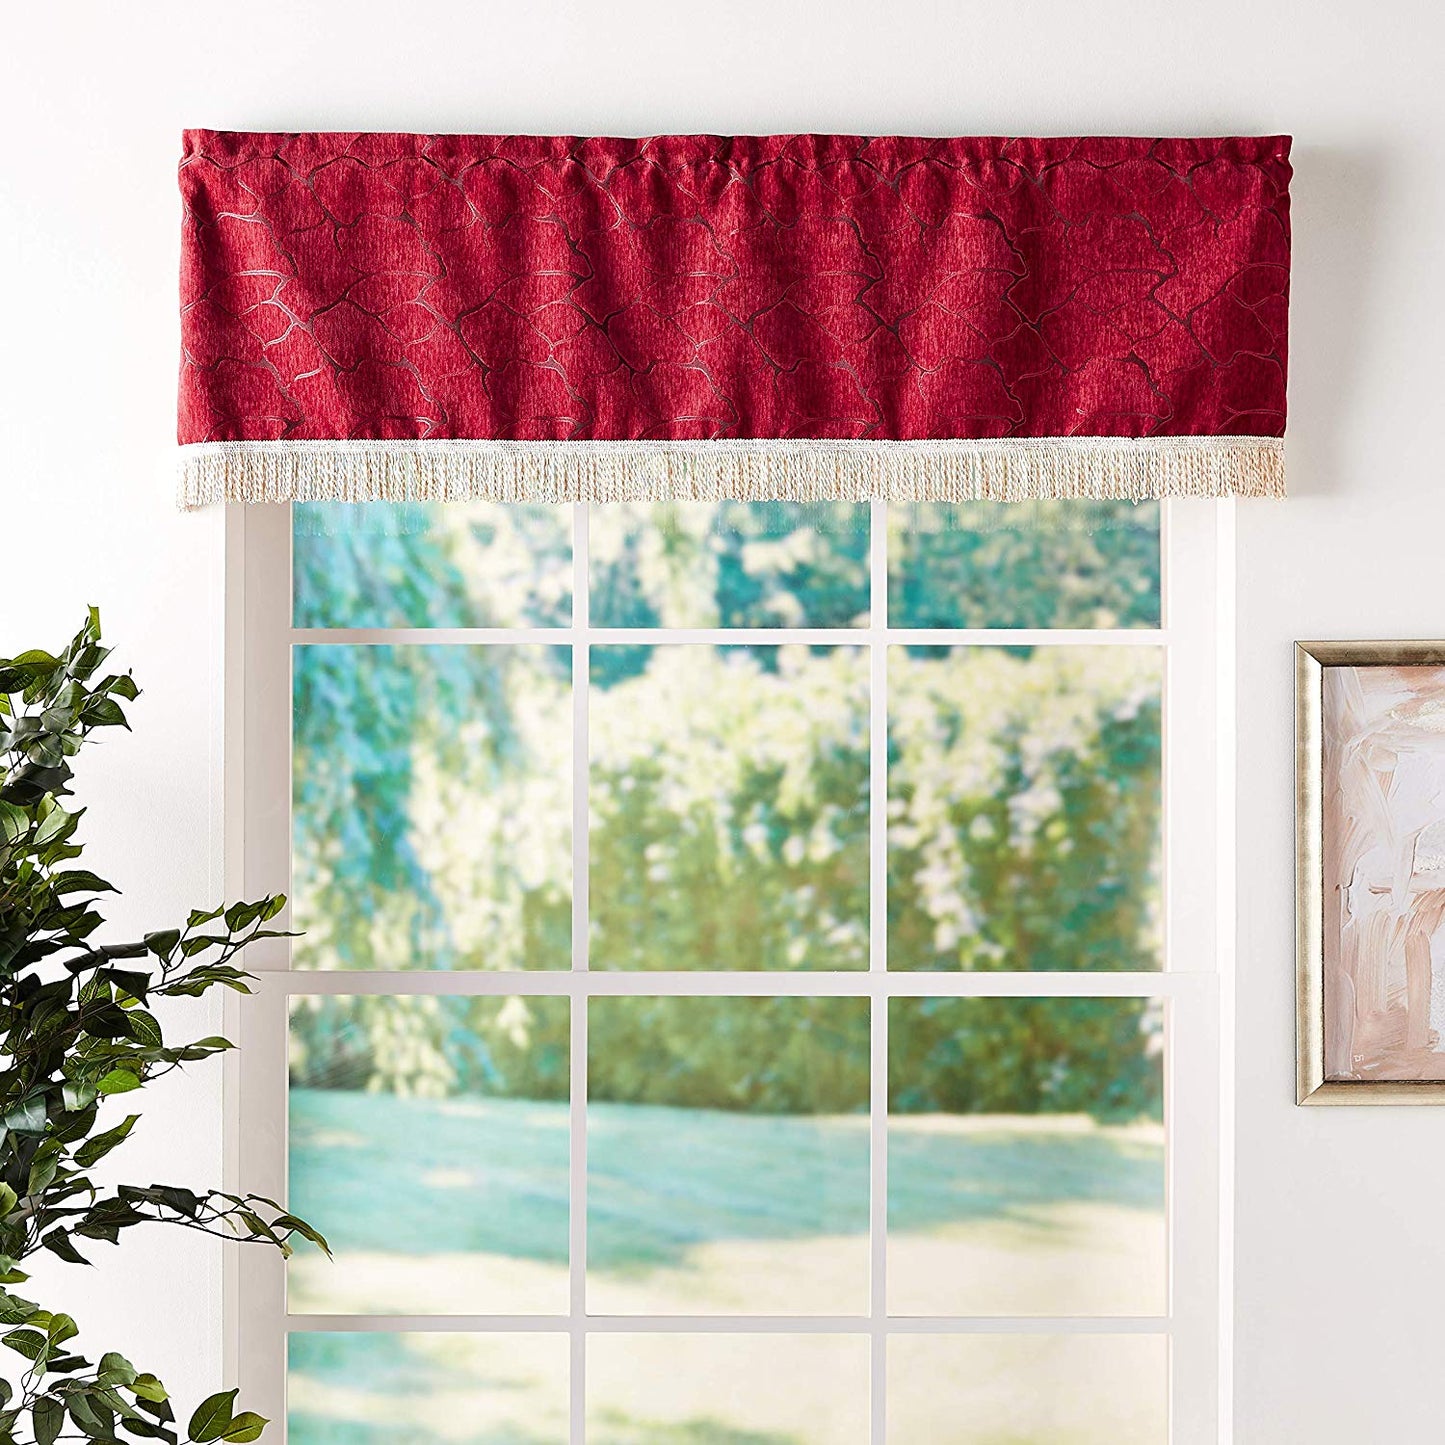 Milano Arts Artistic Design Decorative Window Treatment Rod Pocket Curtain Straight Valance